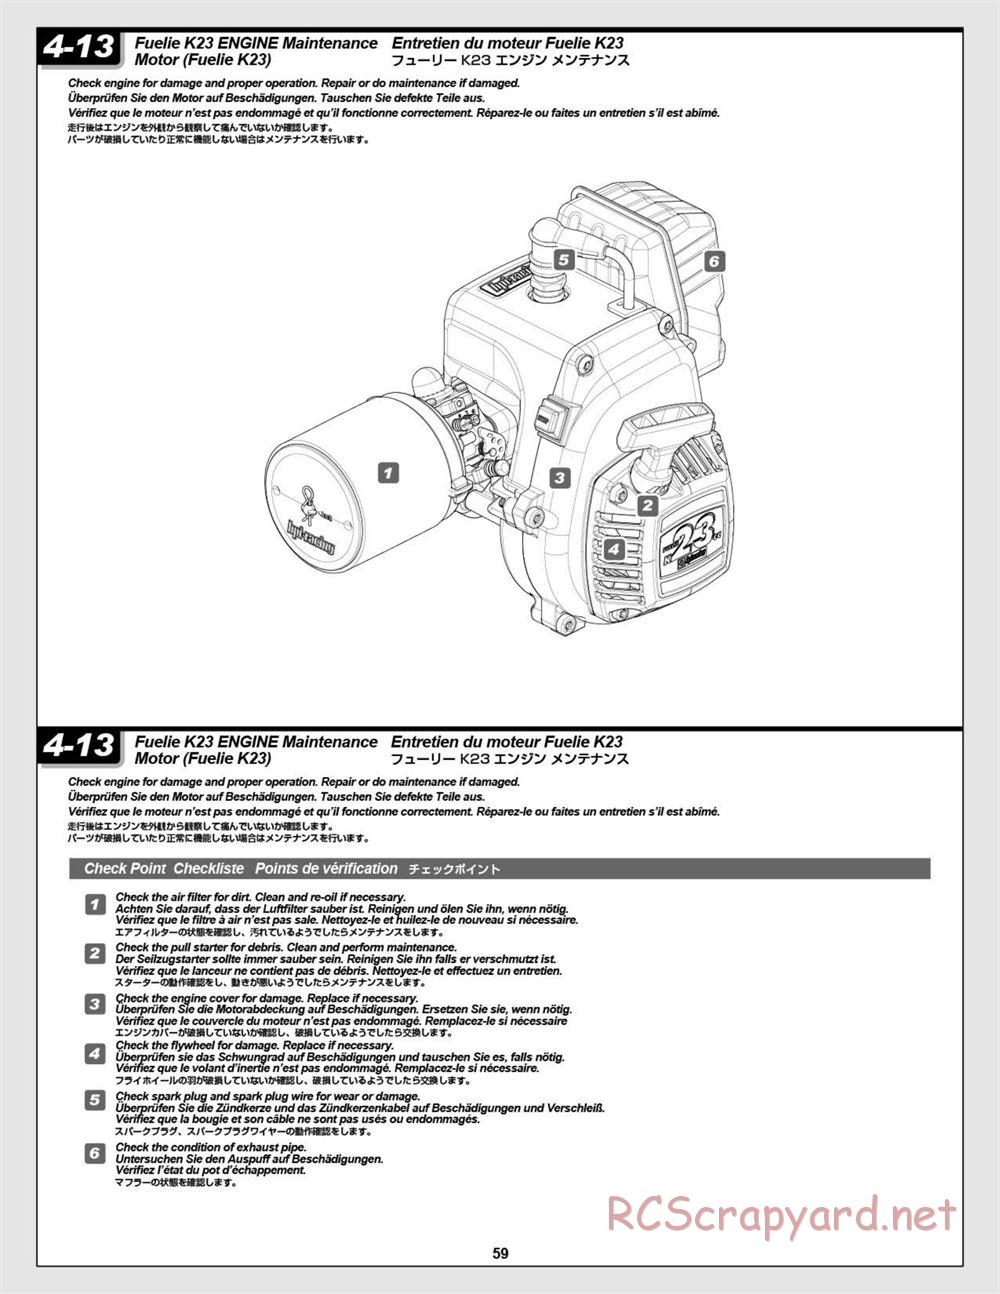 HPI - Baja 5B 2.0 RTR - Manual - Page 59